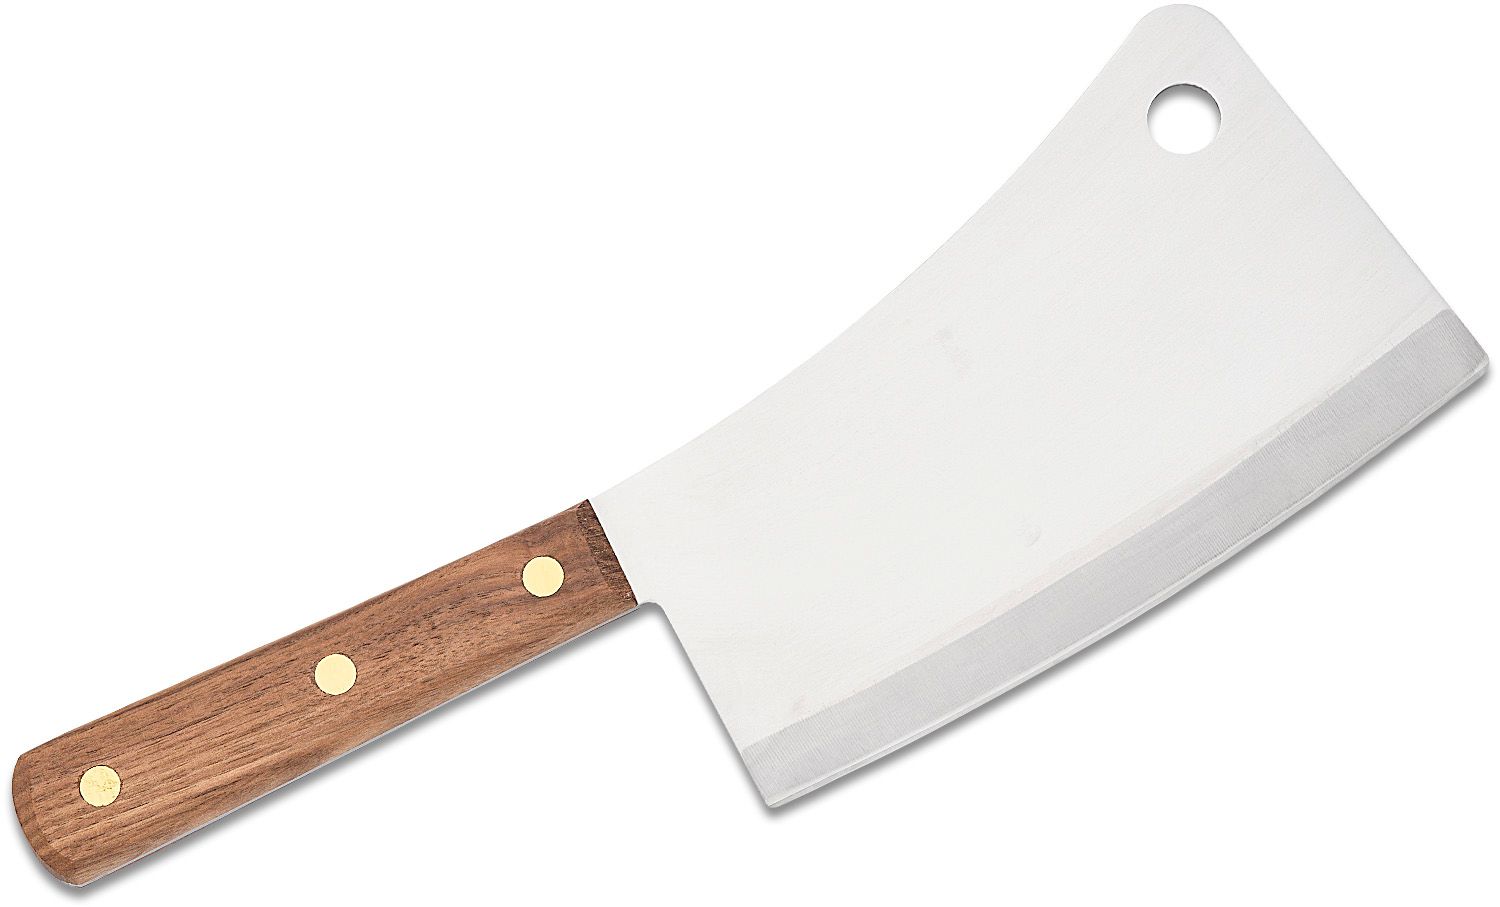 https://pics.knifecenter.com/knifecenter/lamson-kitchen-cutlery/images/LA33100_2.jpg